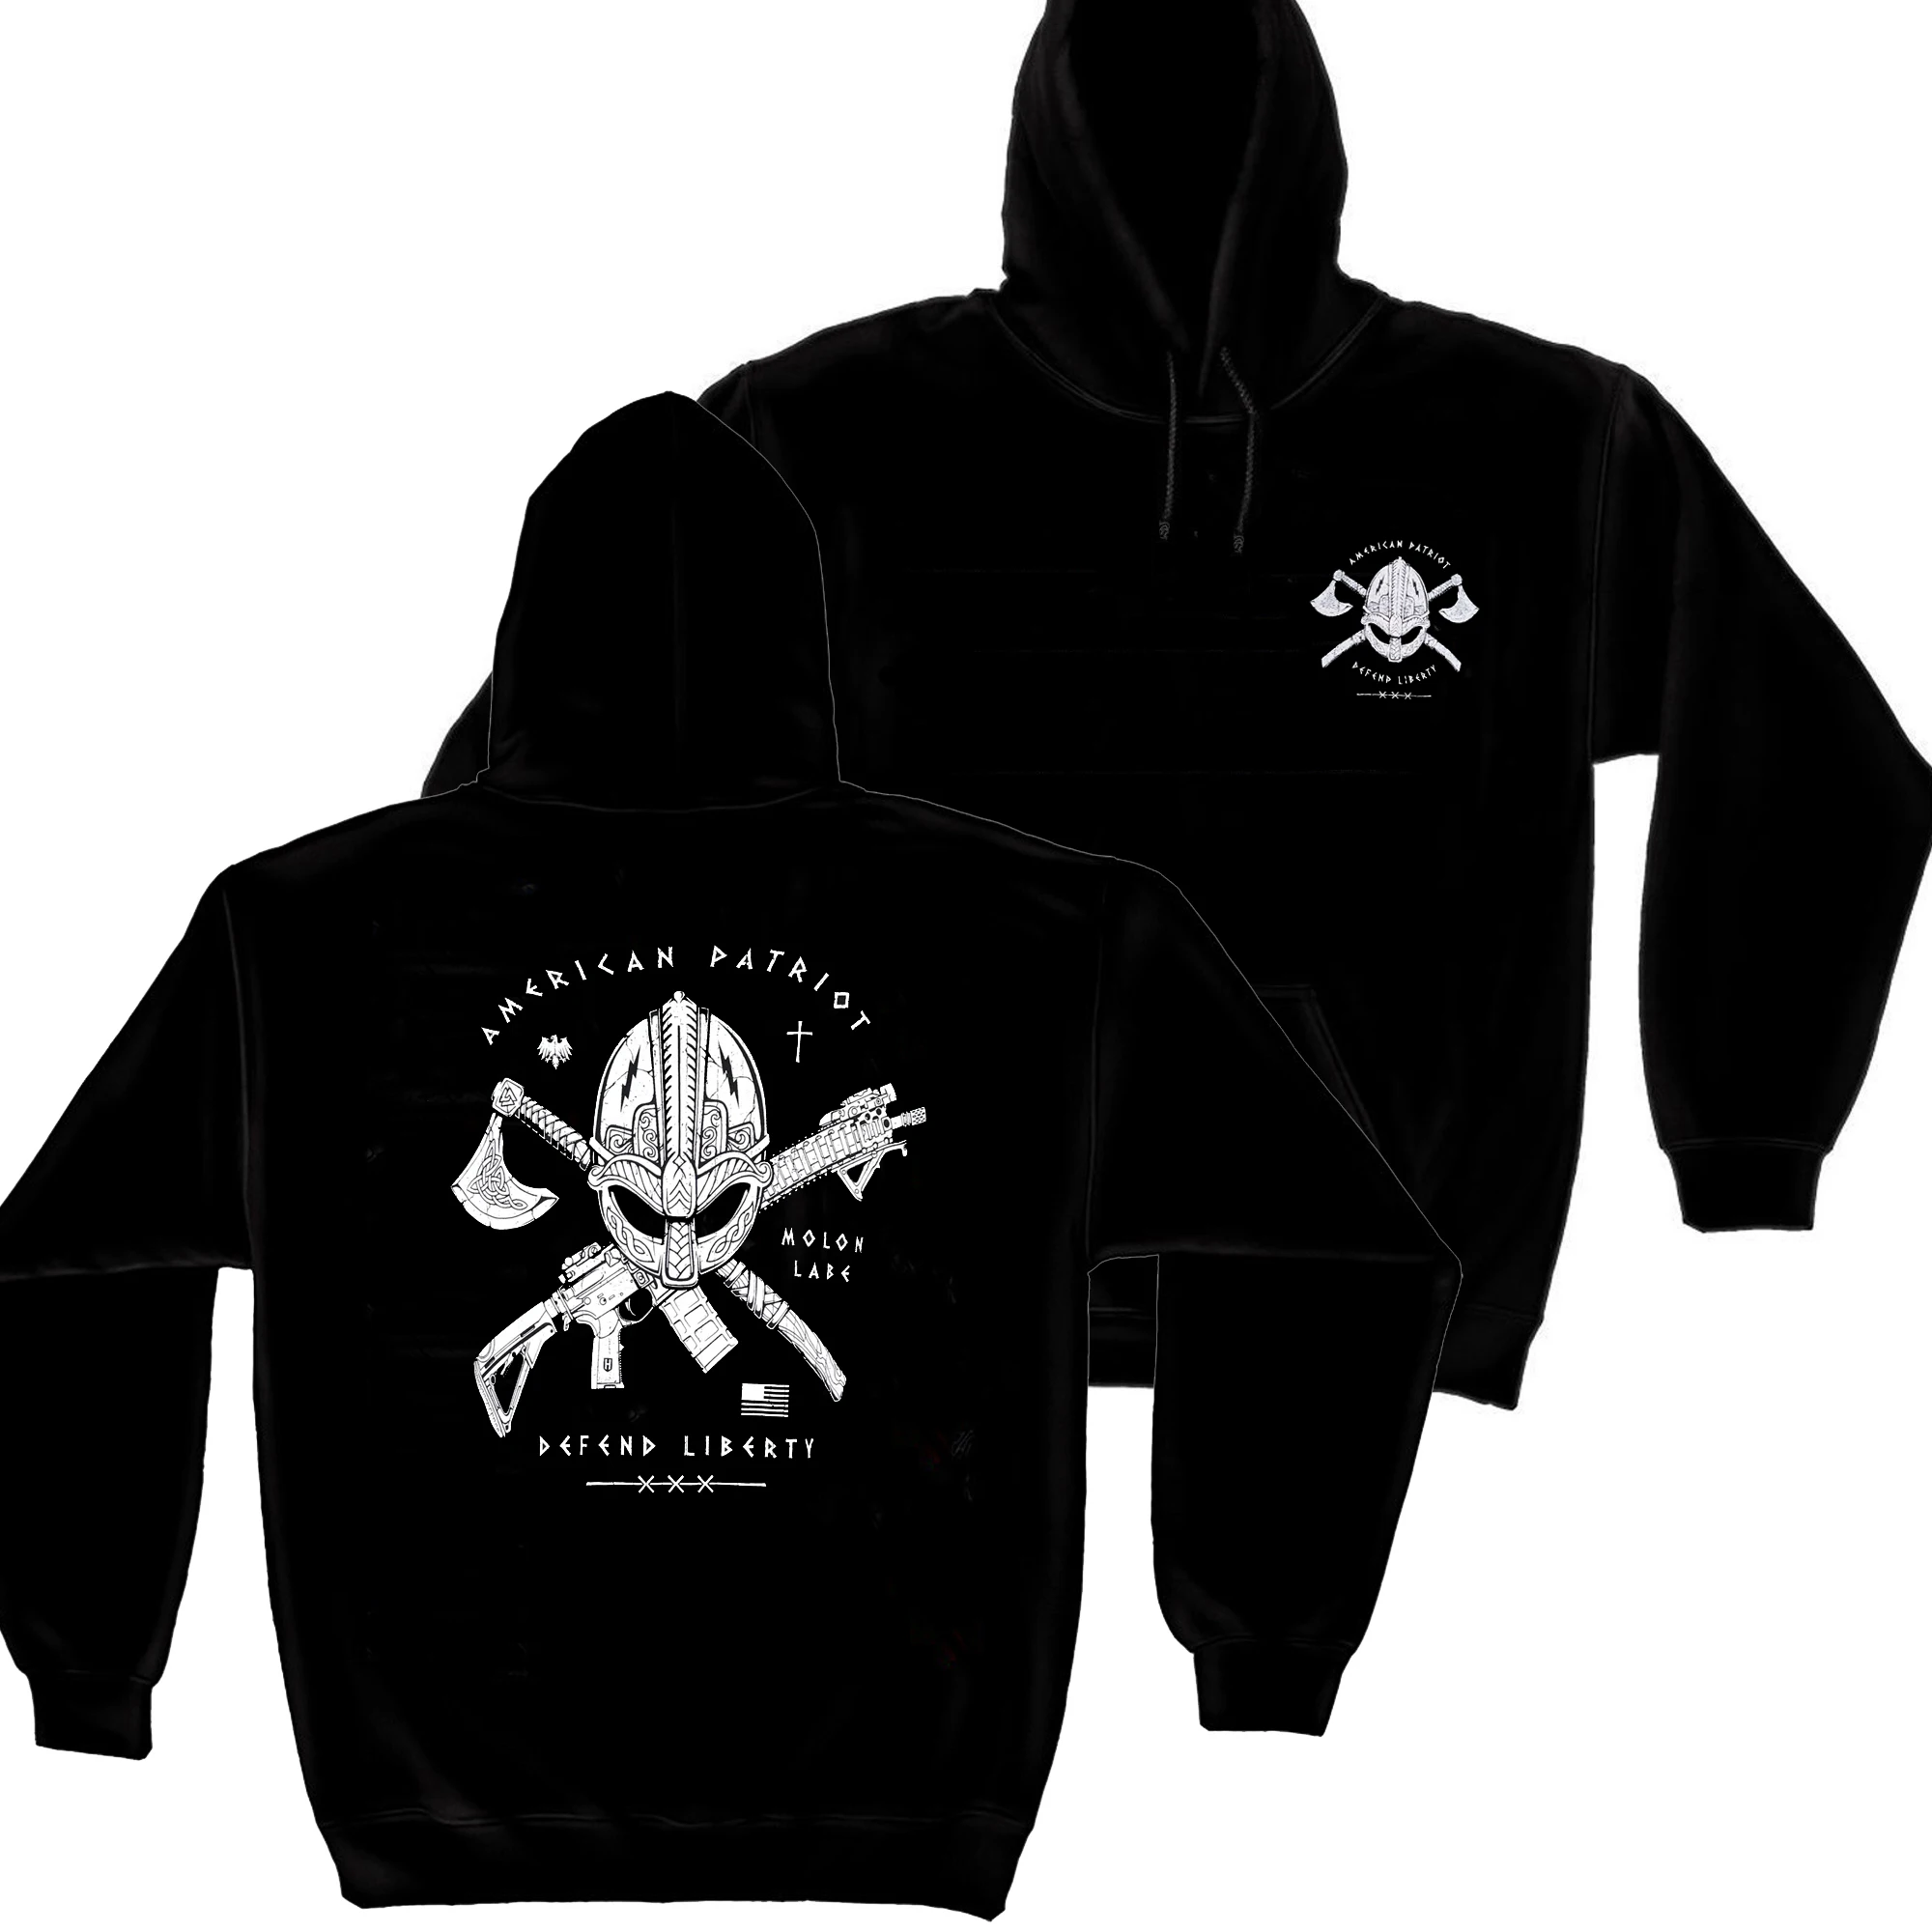 

Heart of Warrior Molon Labe Defend Liberty Military Grunt Pullover Hoodie 100% Cotton Casual Mens Sweatshirts Patriot Streetwear